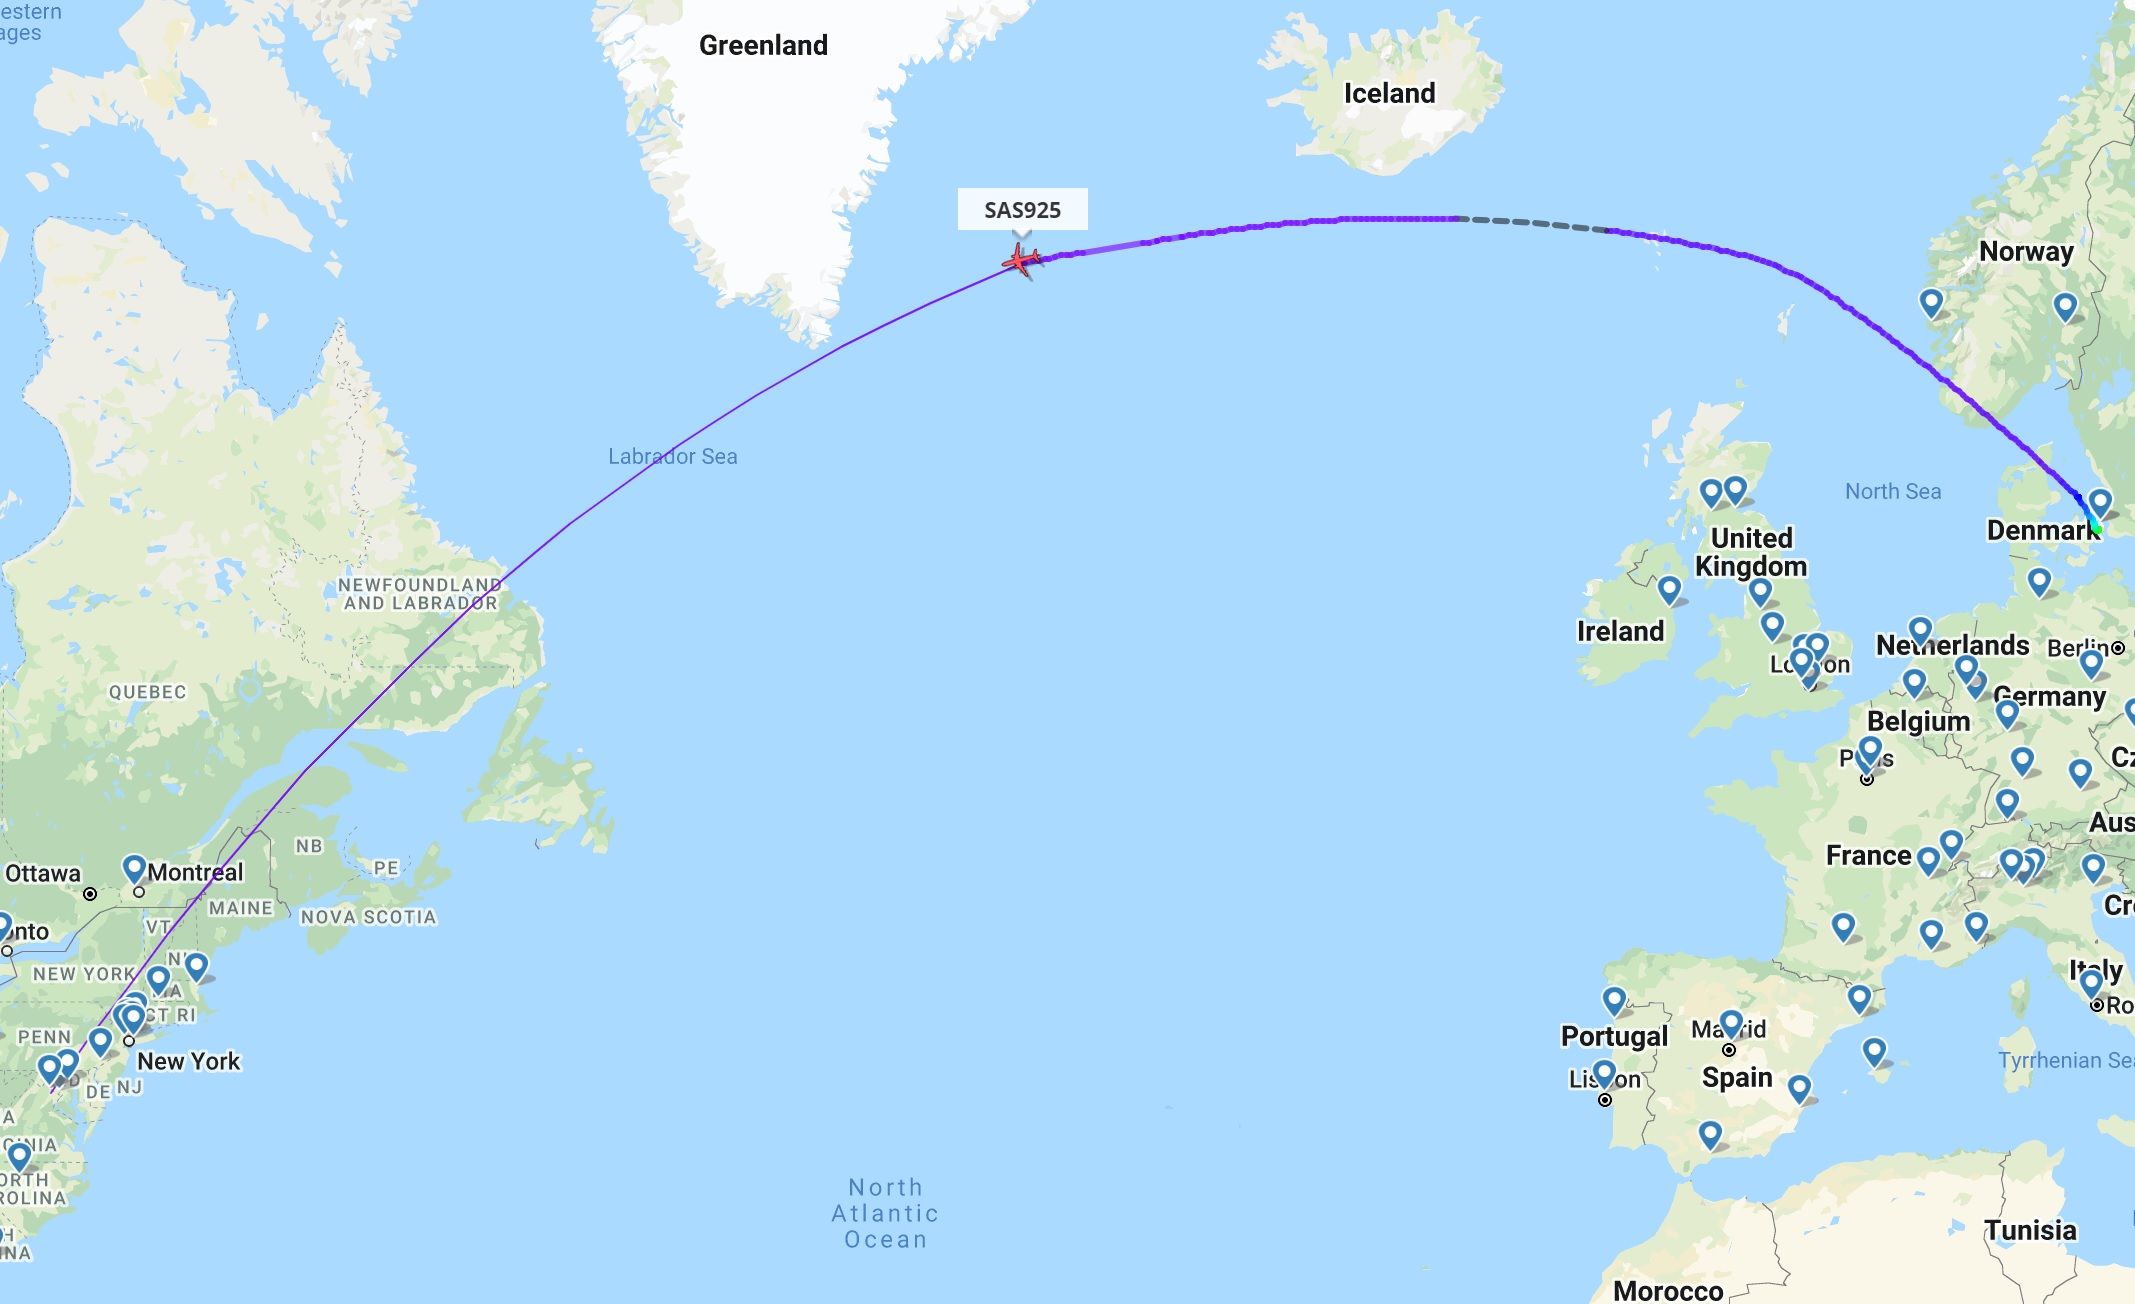 The world's longest narrowbody route